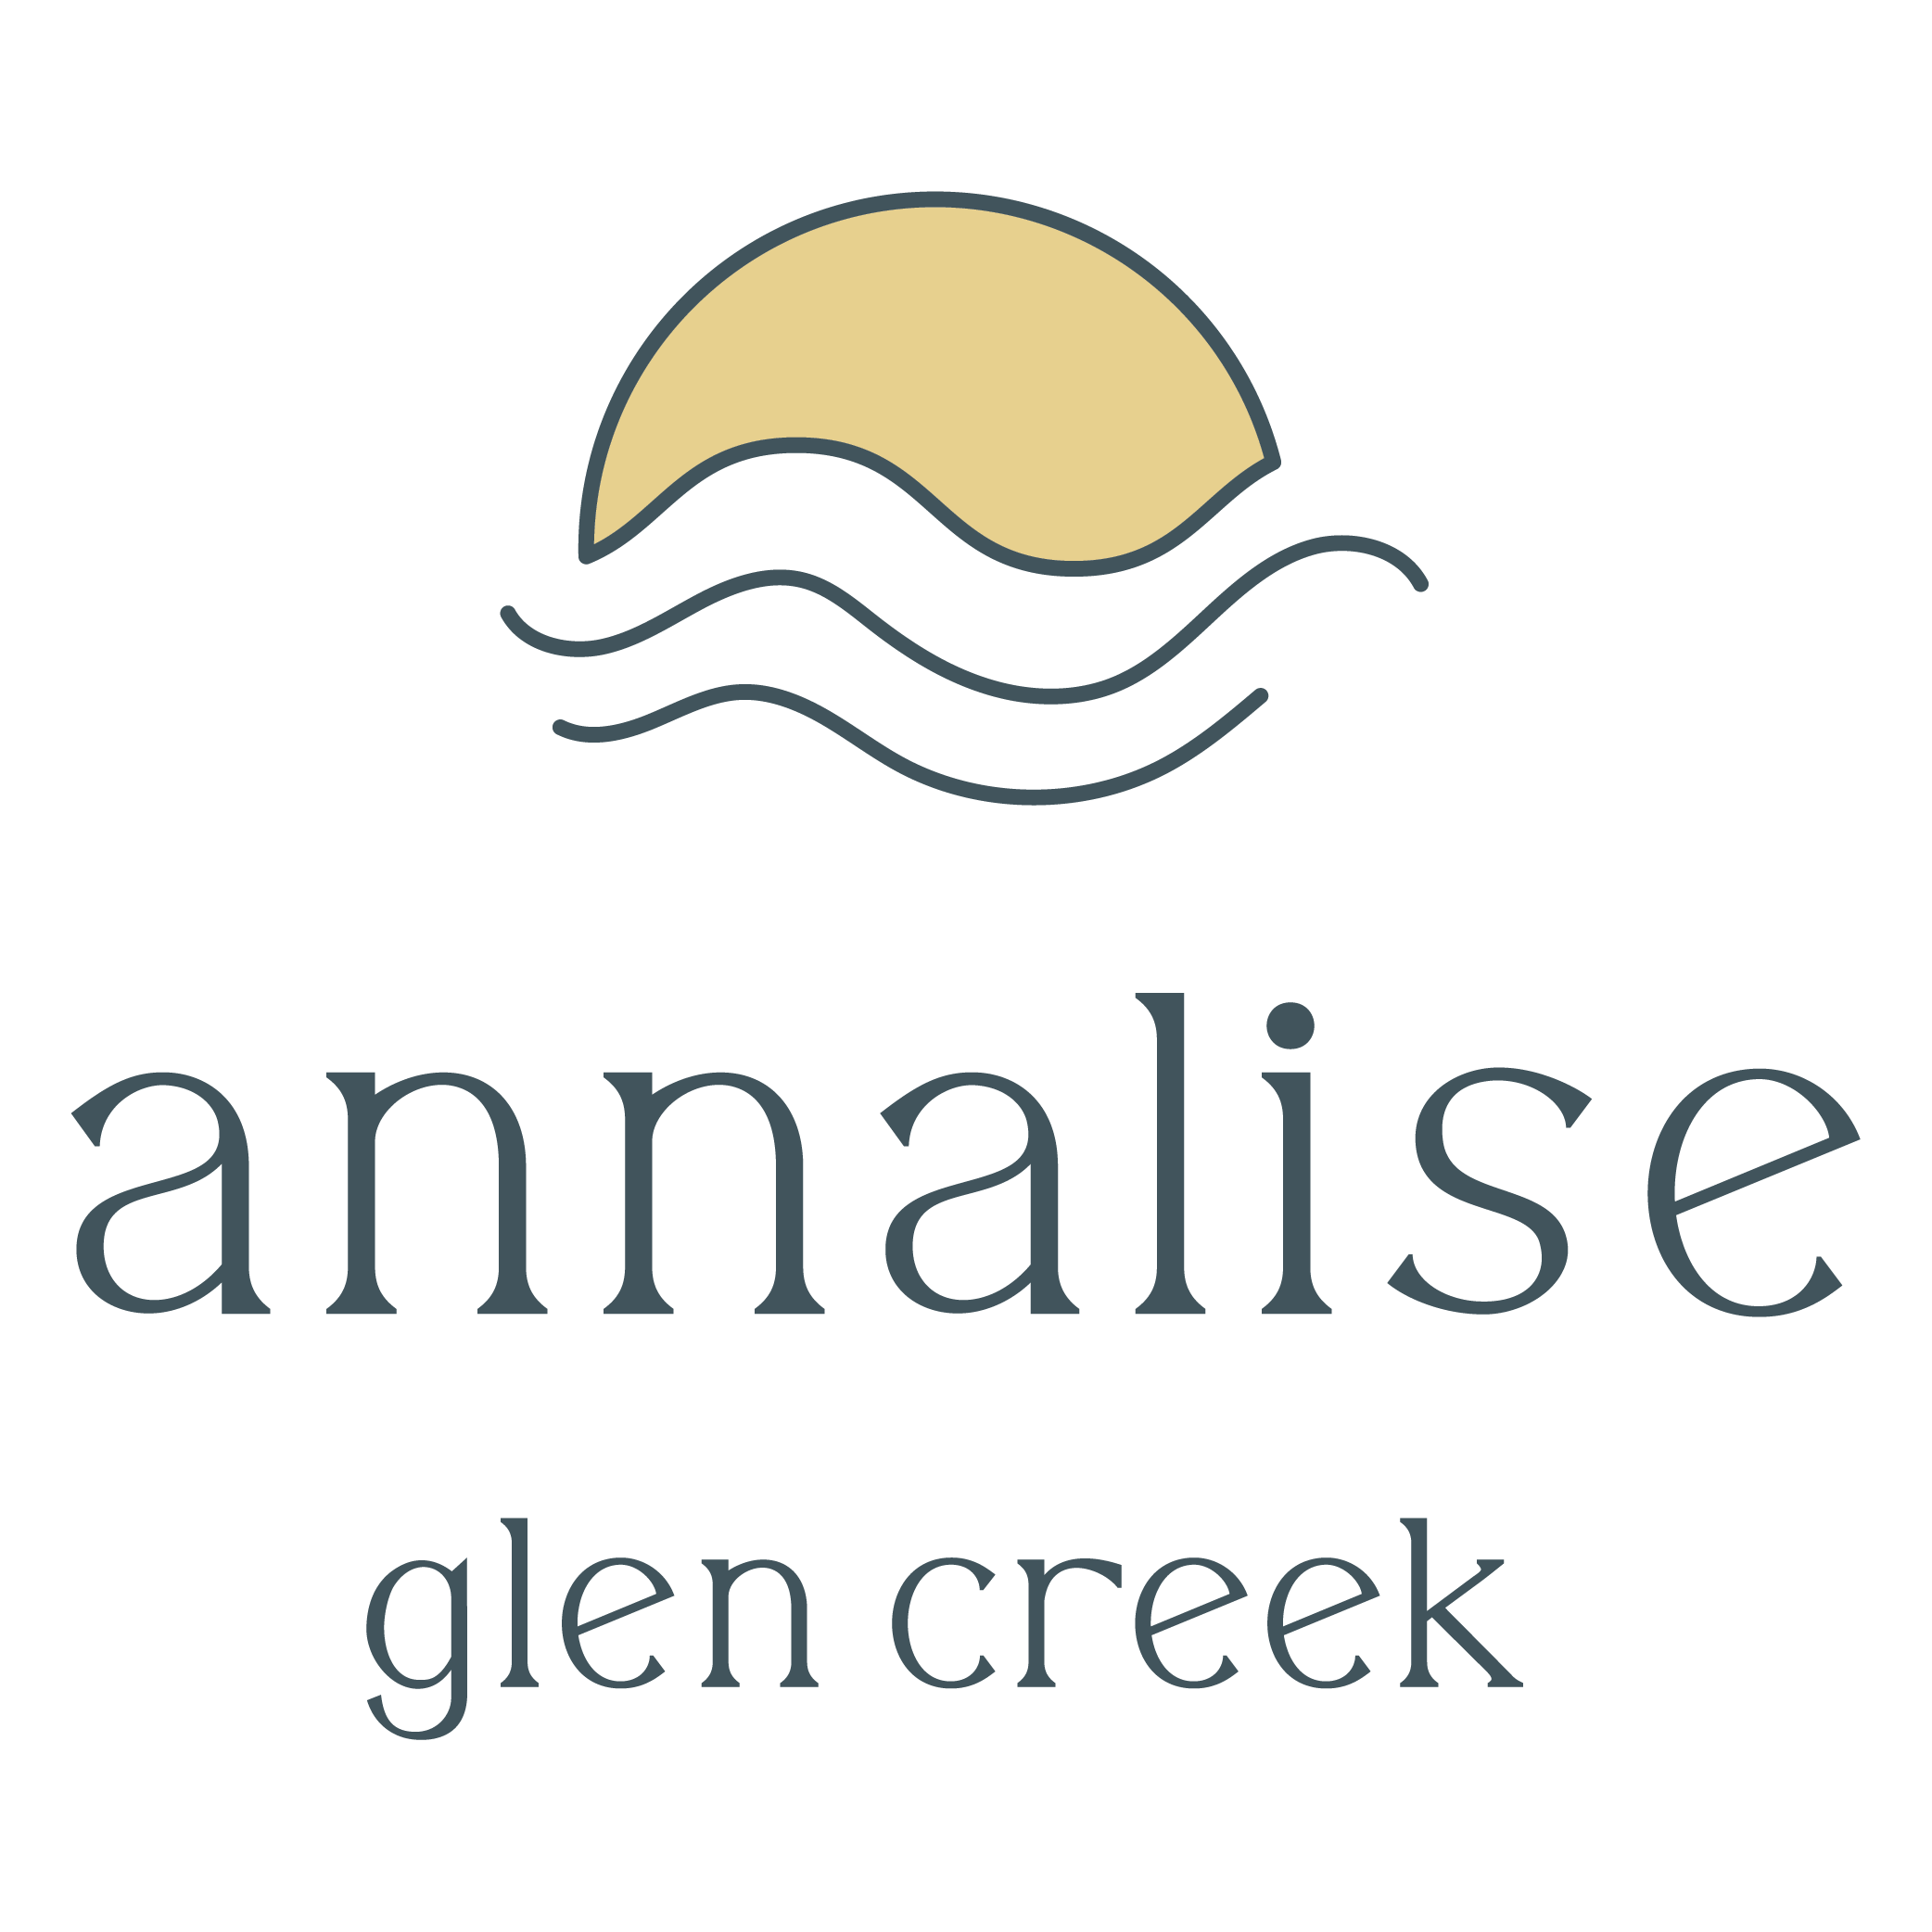 Annalise Glen Creek